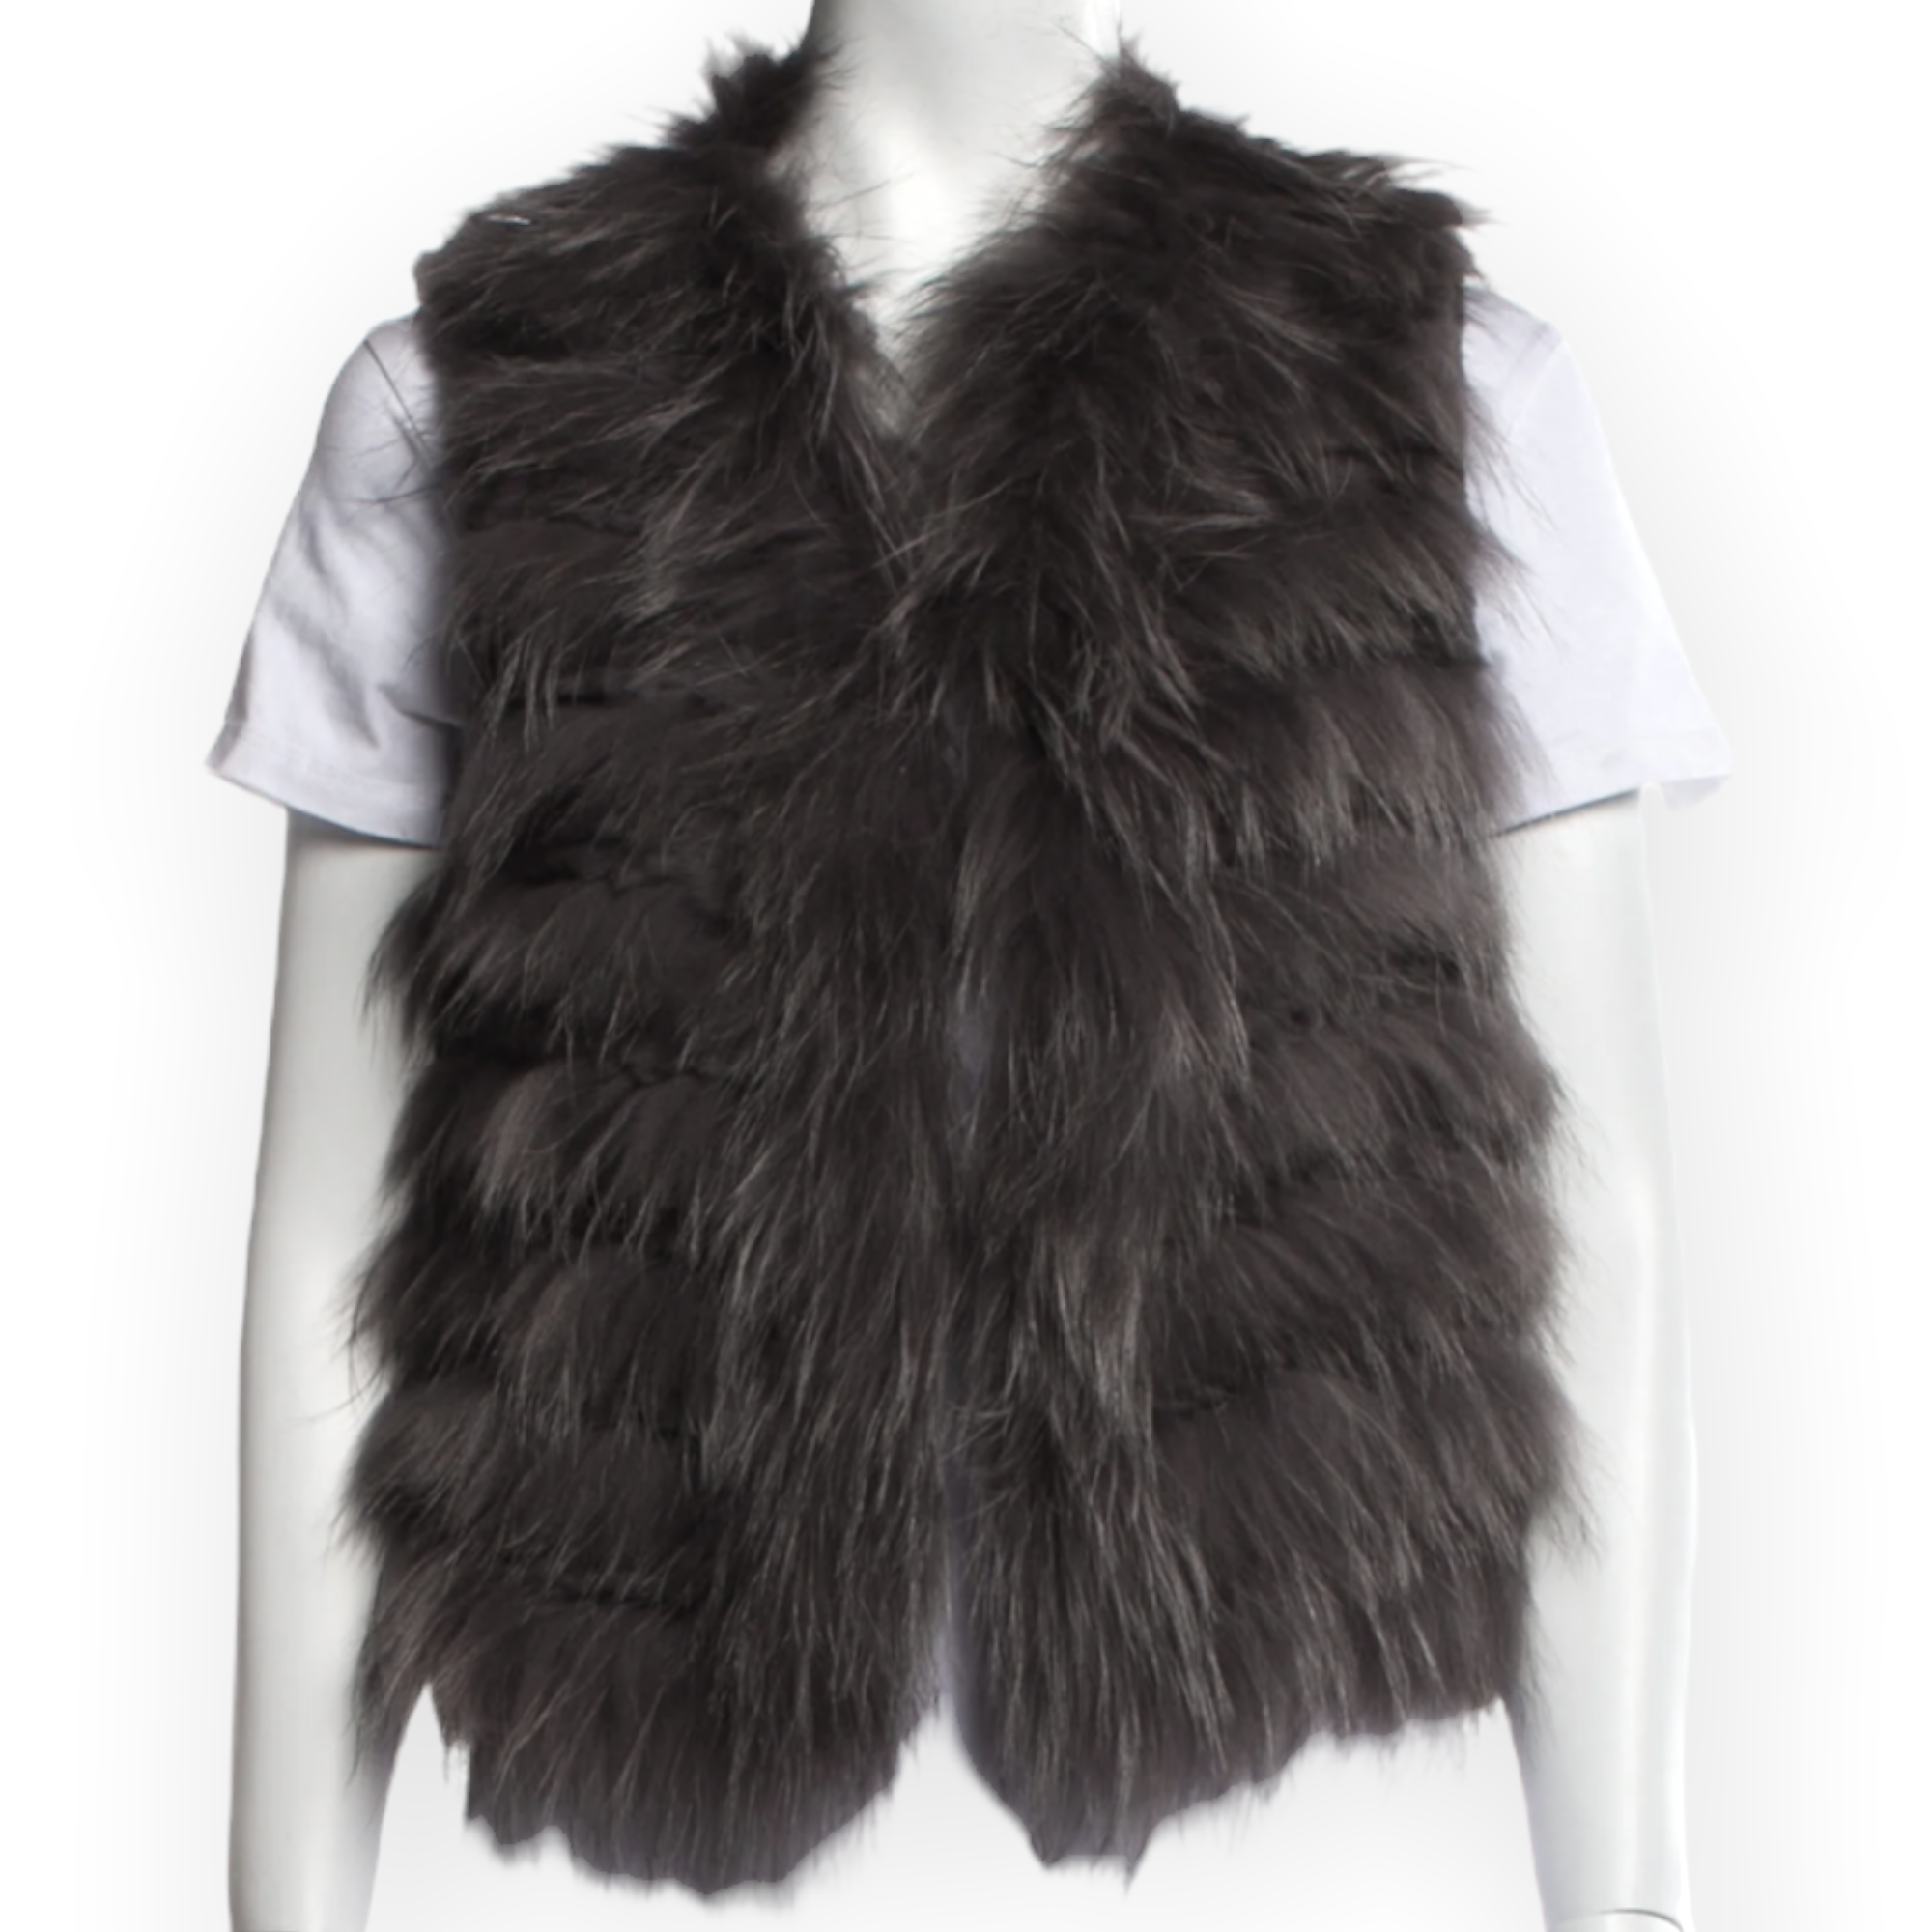 ALICE + OLIVIA Fur Vest |Size: XS|